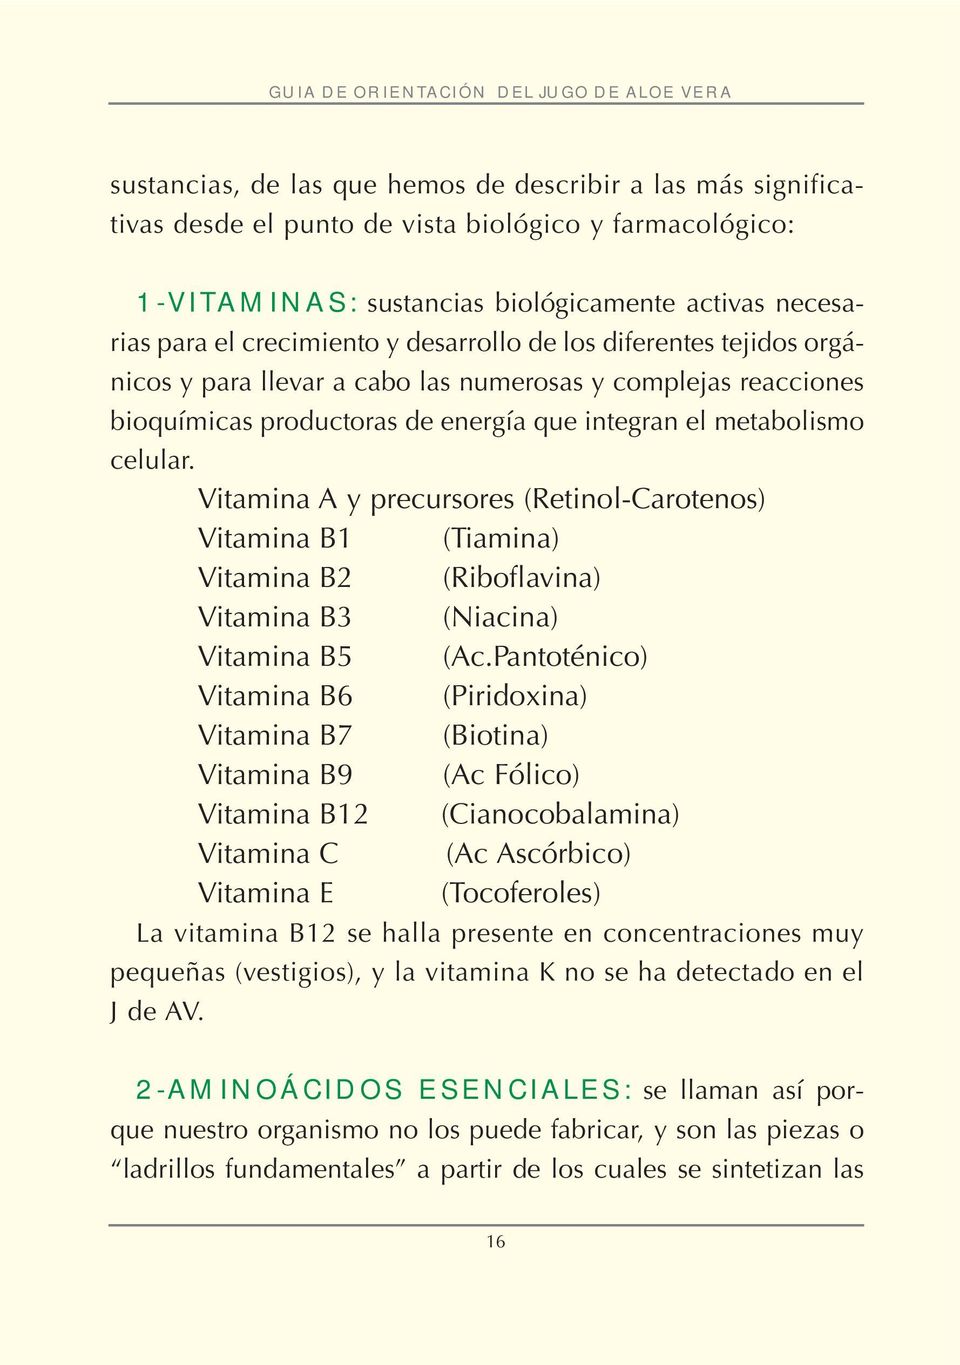 Vitamina A y precursores (Retinol-Carotenos) Vitamina B1 (Tiamina) Vitamina B2 (Riboflavina) Vitamina B3 (Niacina) Vitamina B5 (Ac.